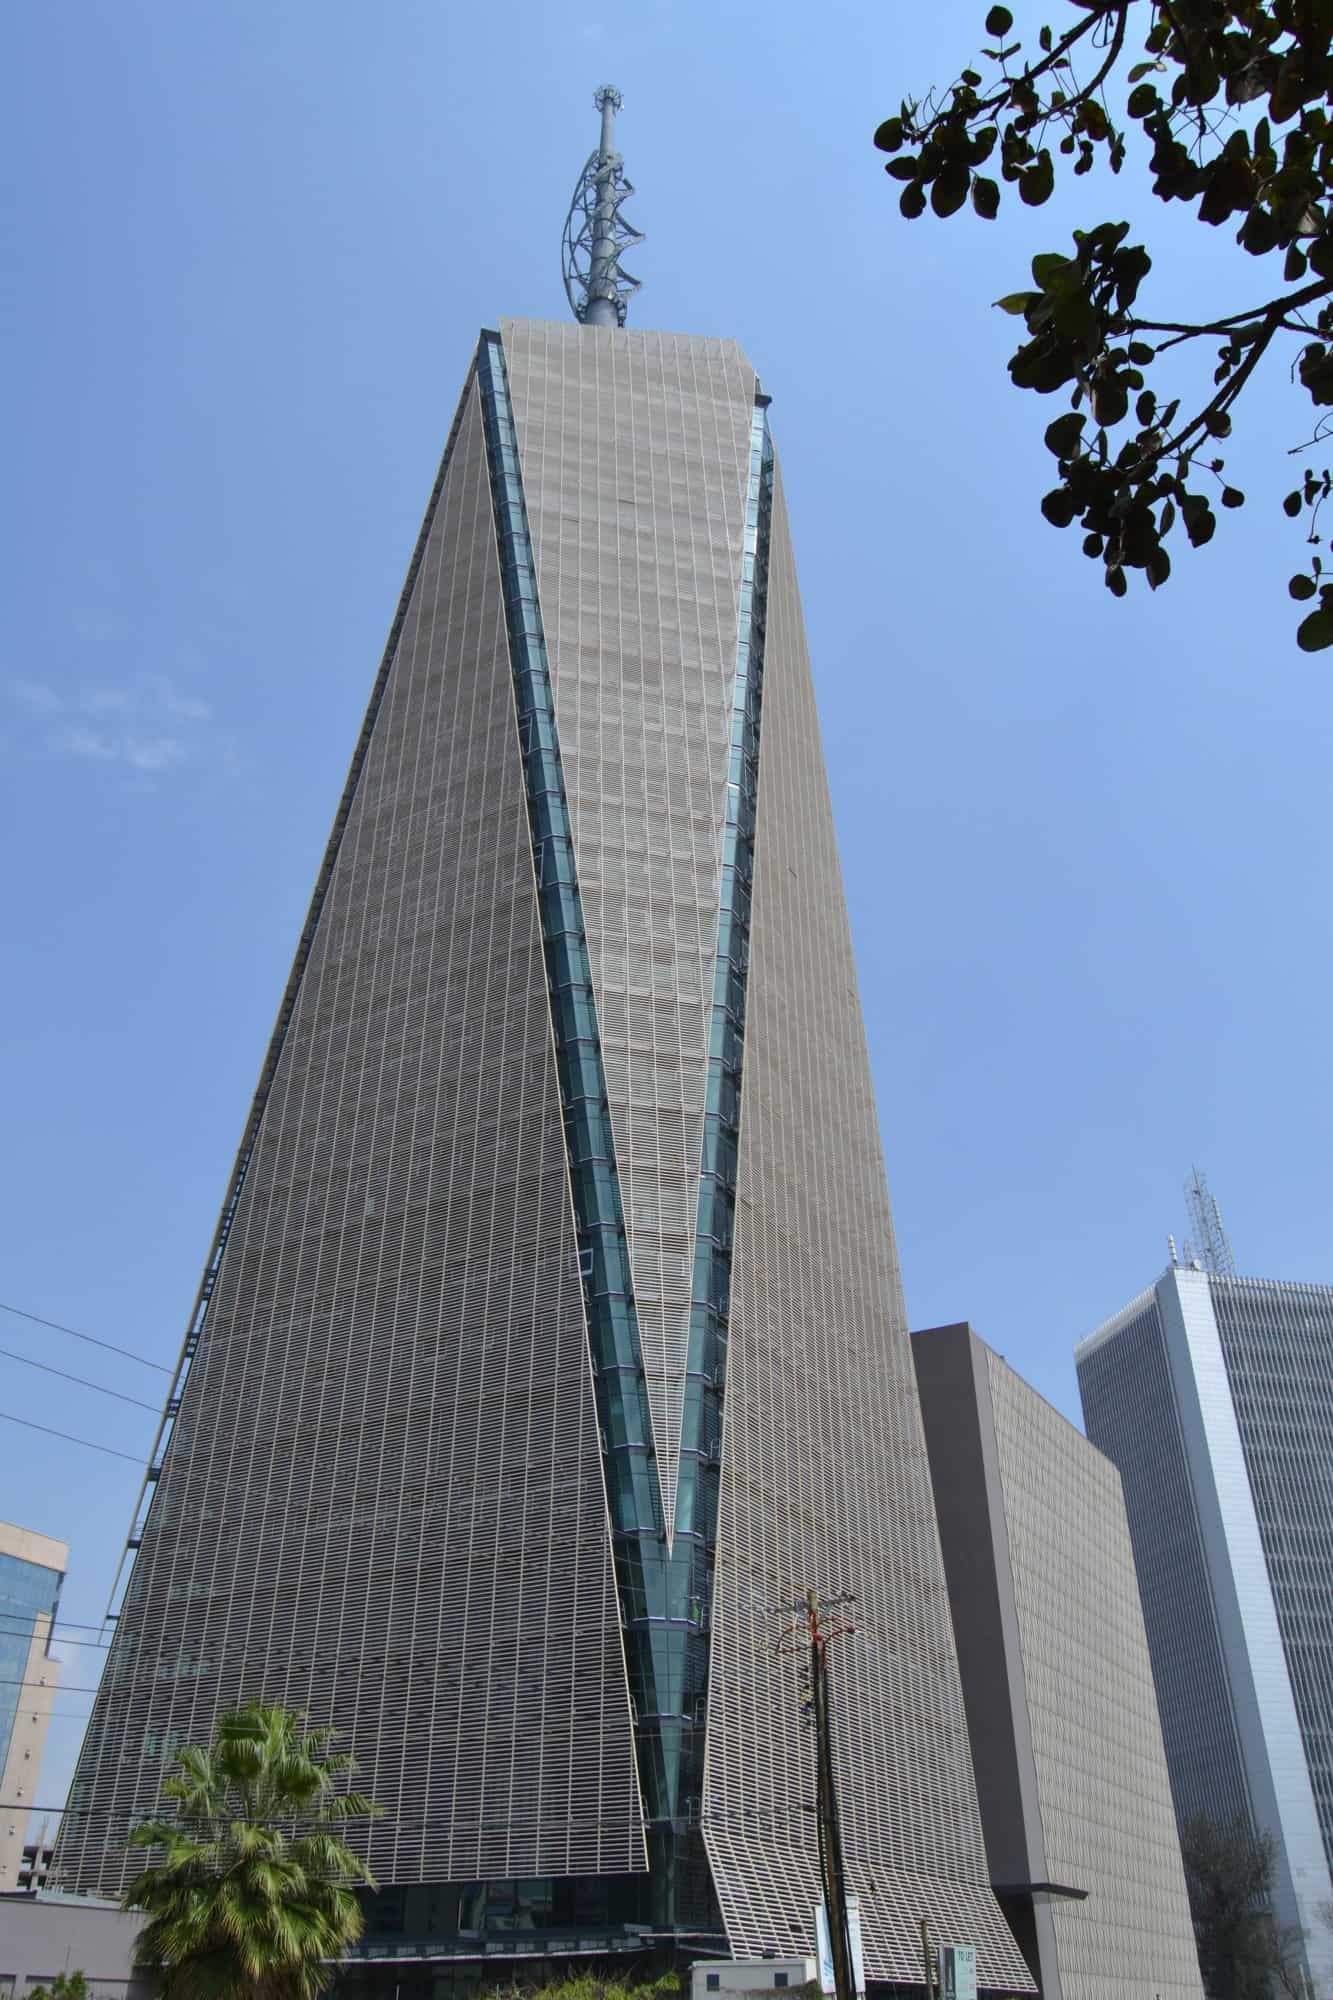 Tallest building of Kenya - Britam Tower